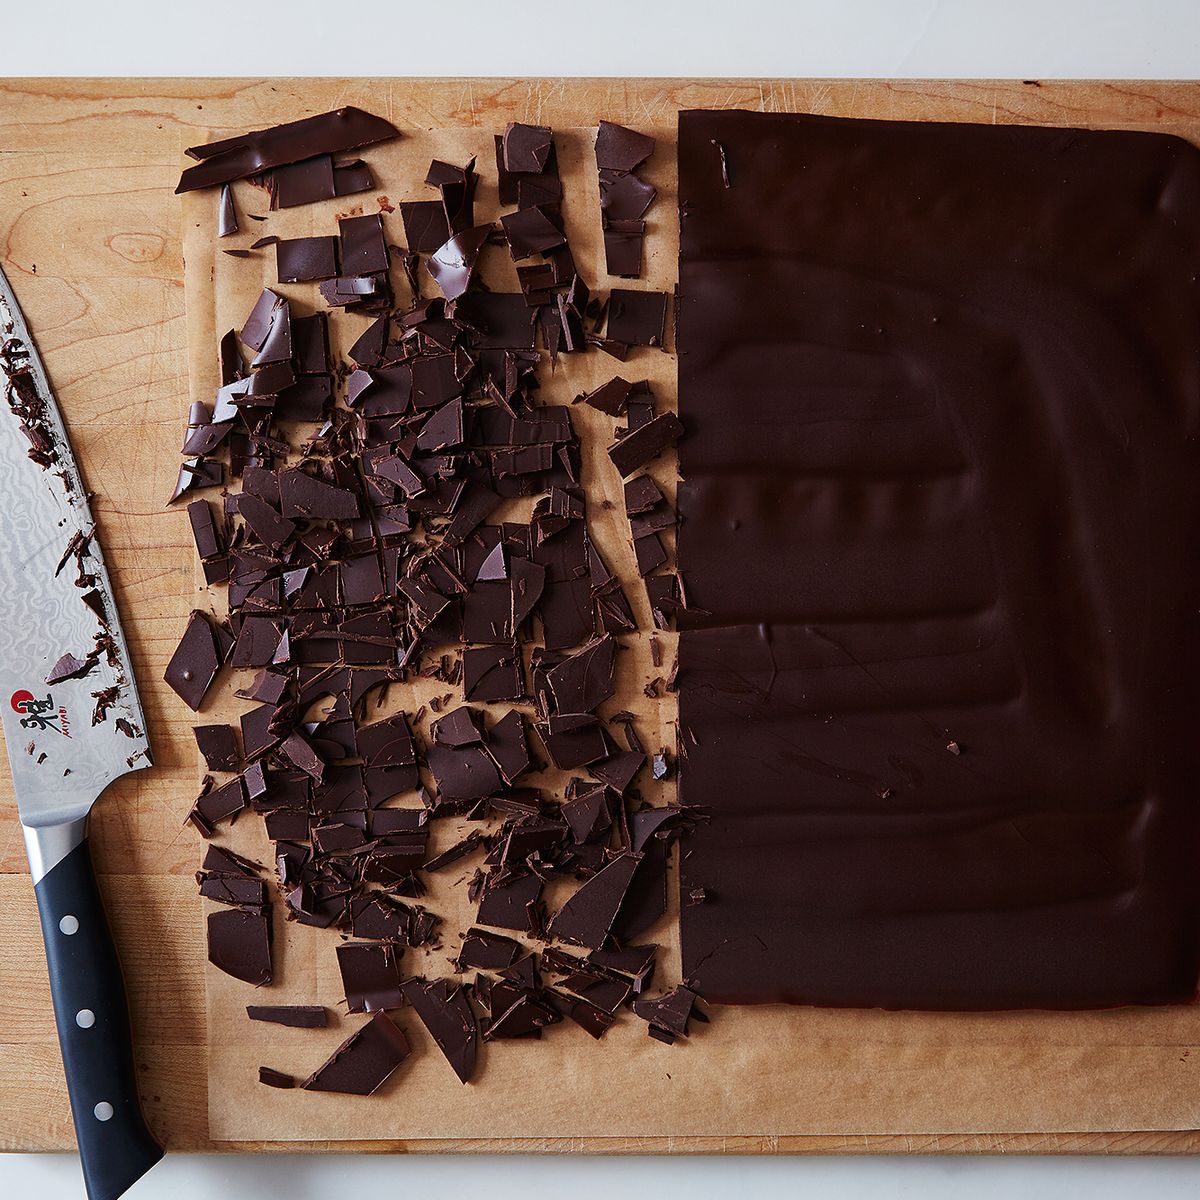 How to Make Perfect Chocolate Chunks For Ice Cream